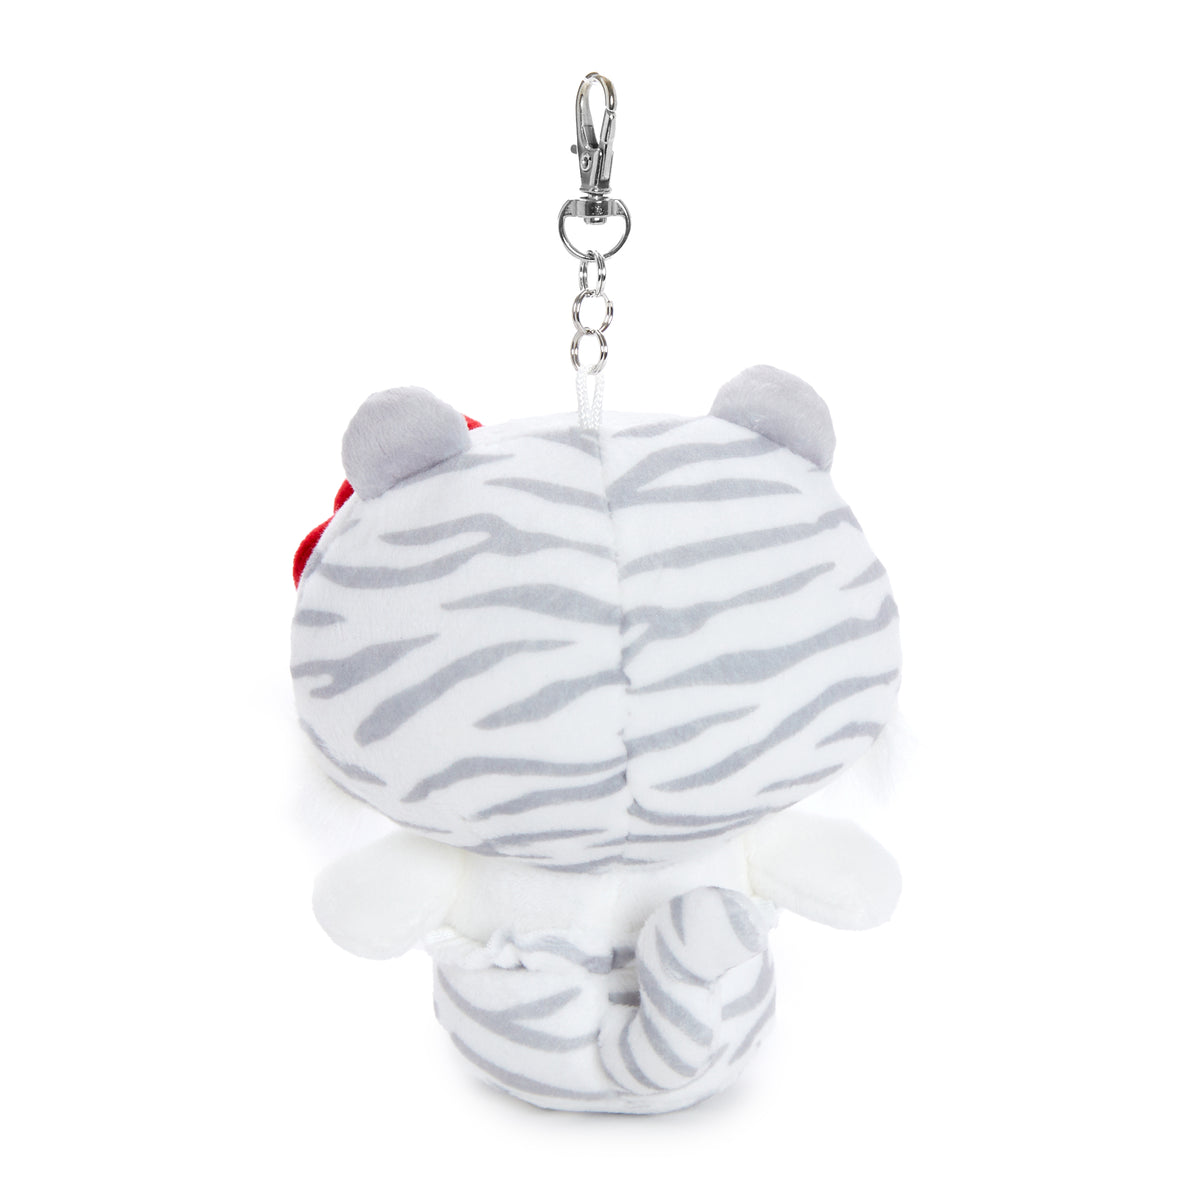 Hello Kitty Mascot Plush (Tiger Series) Plush Global Original   